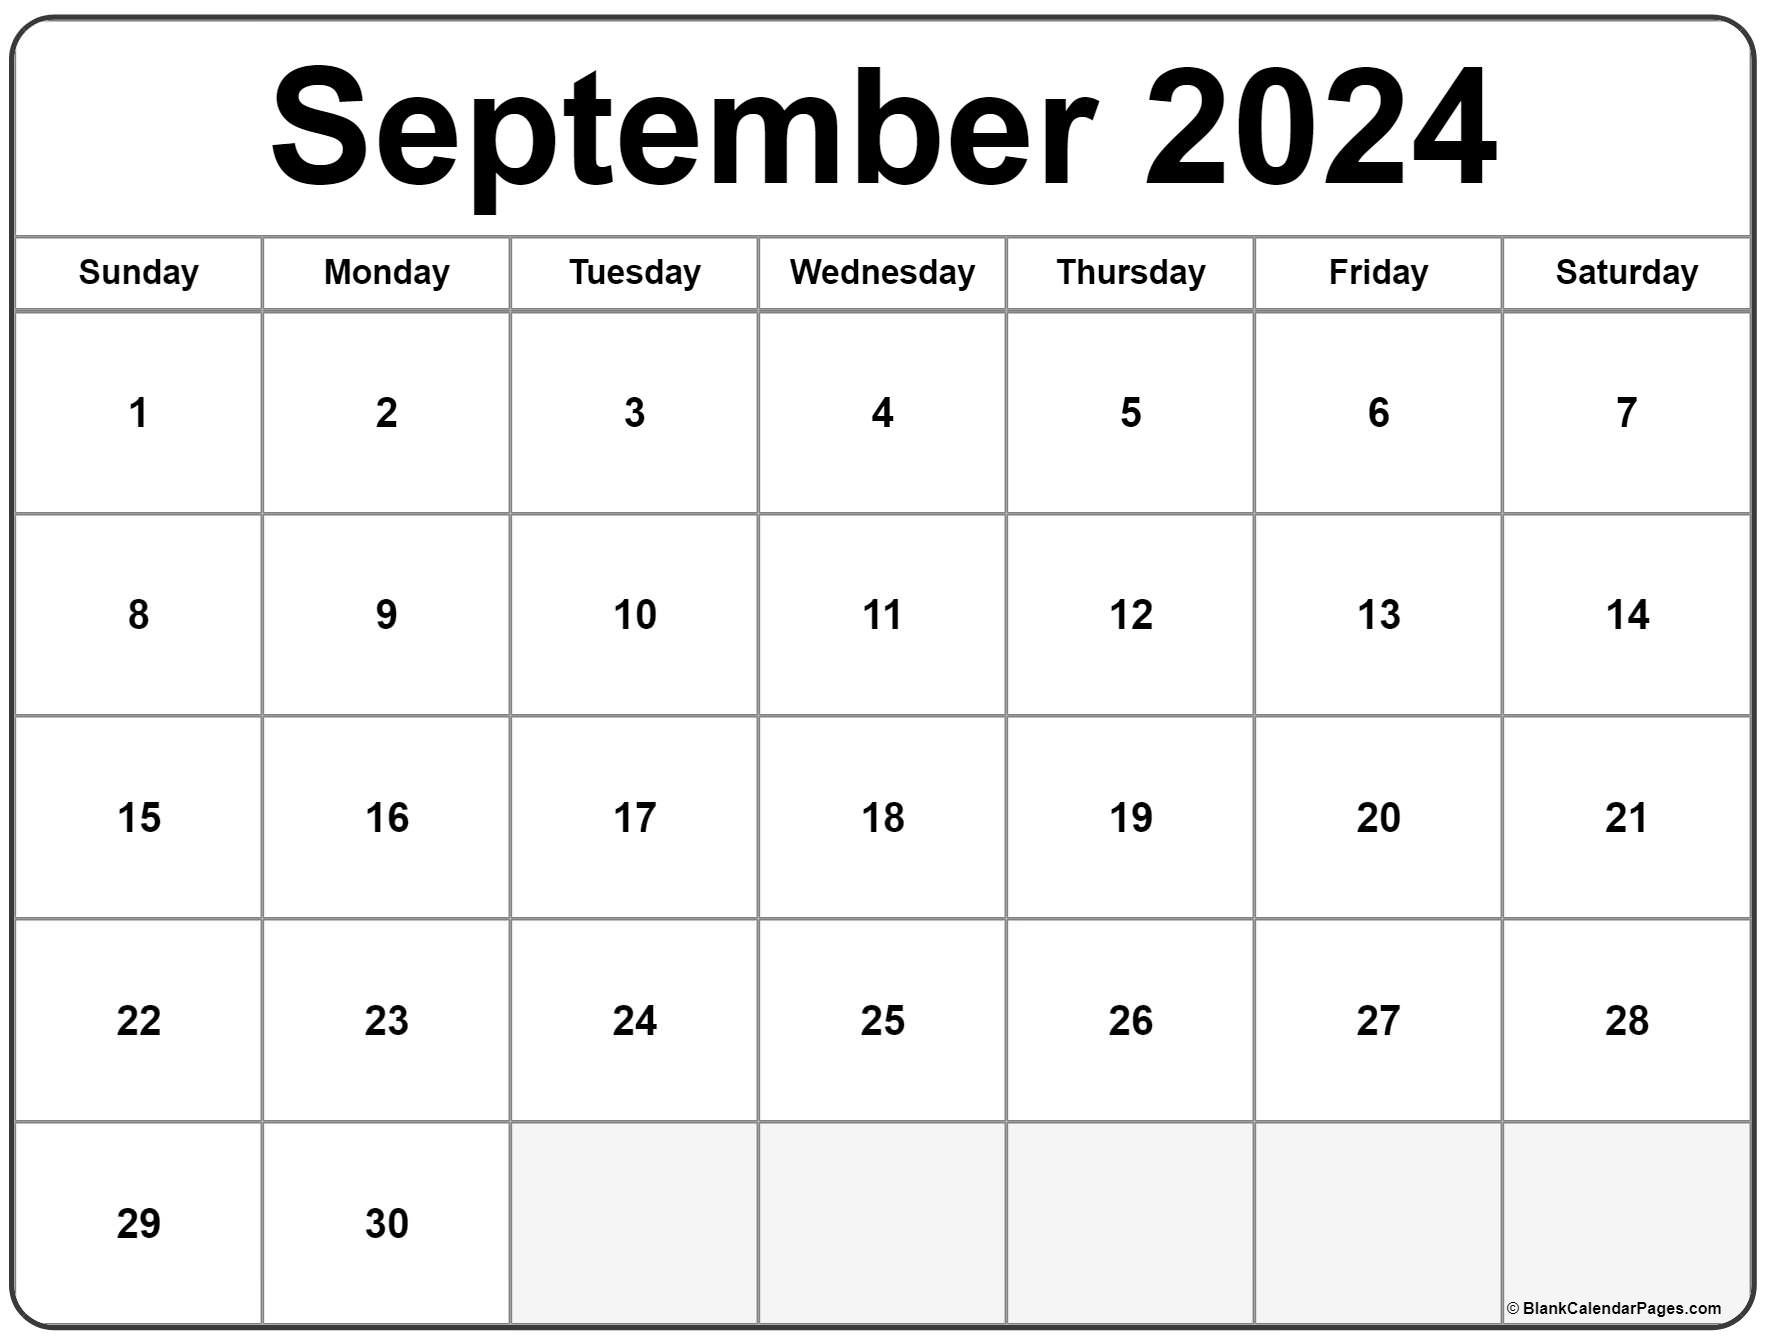 September 2024 Calendar | Free Printable Calendar throughout Free Printable Calendar 2024 Sept December